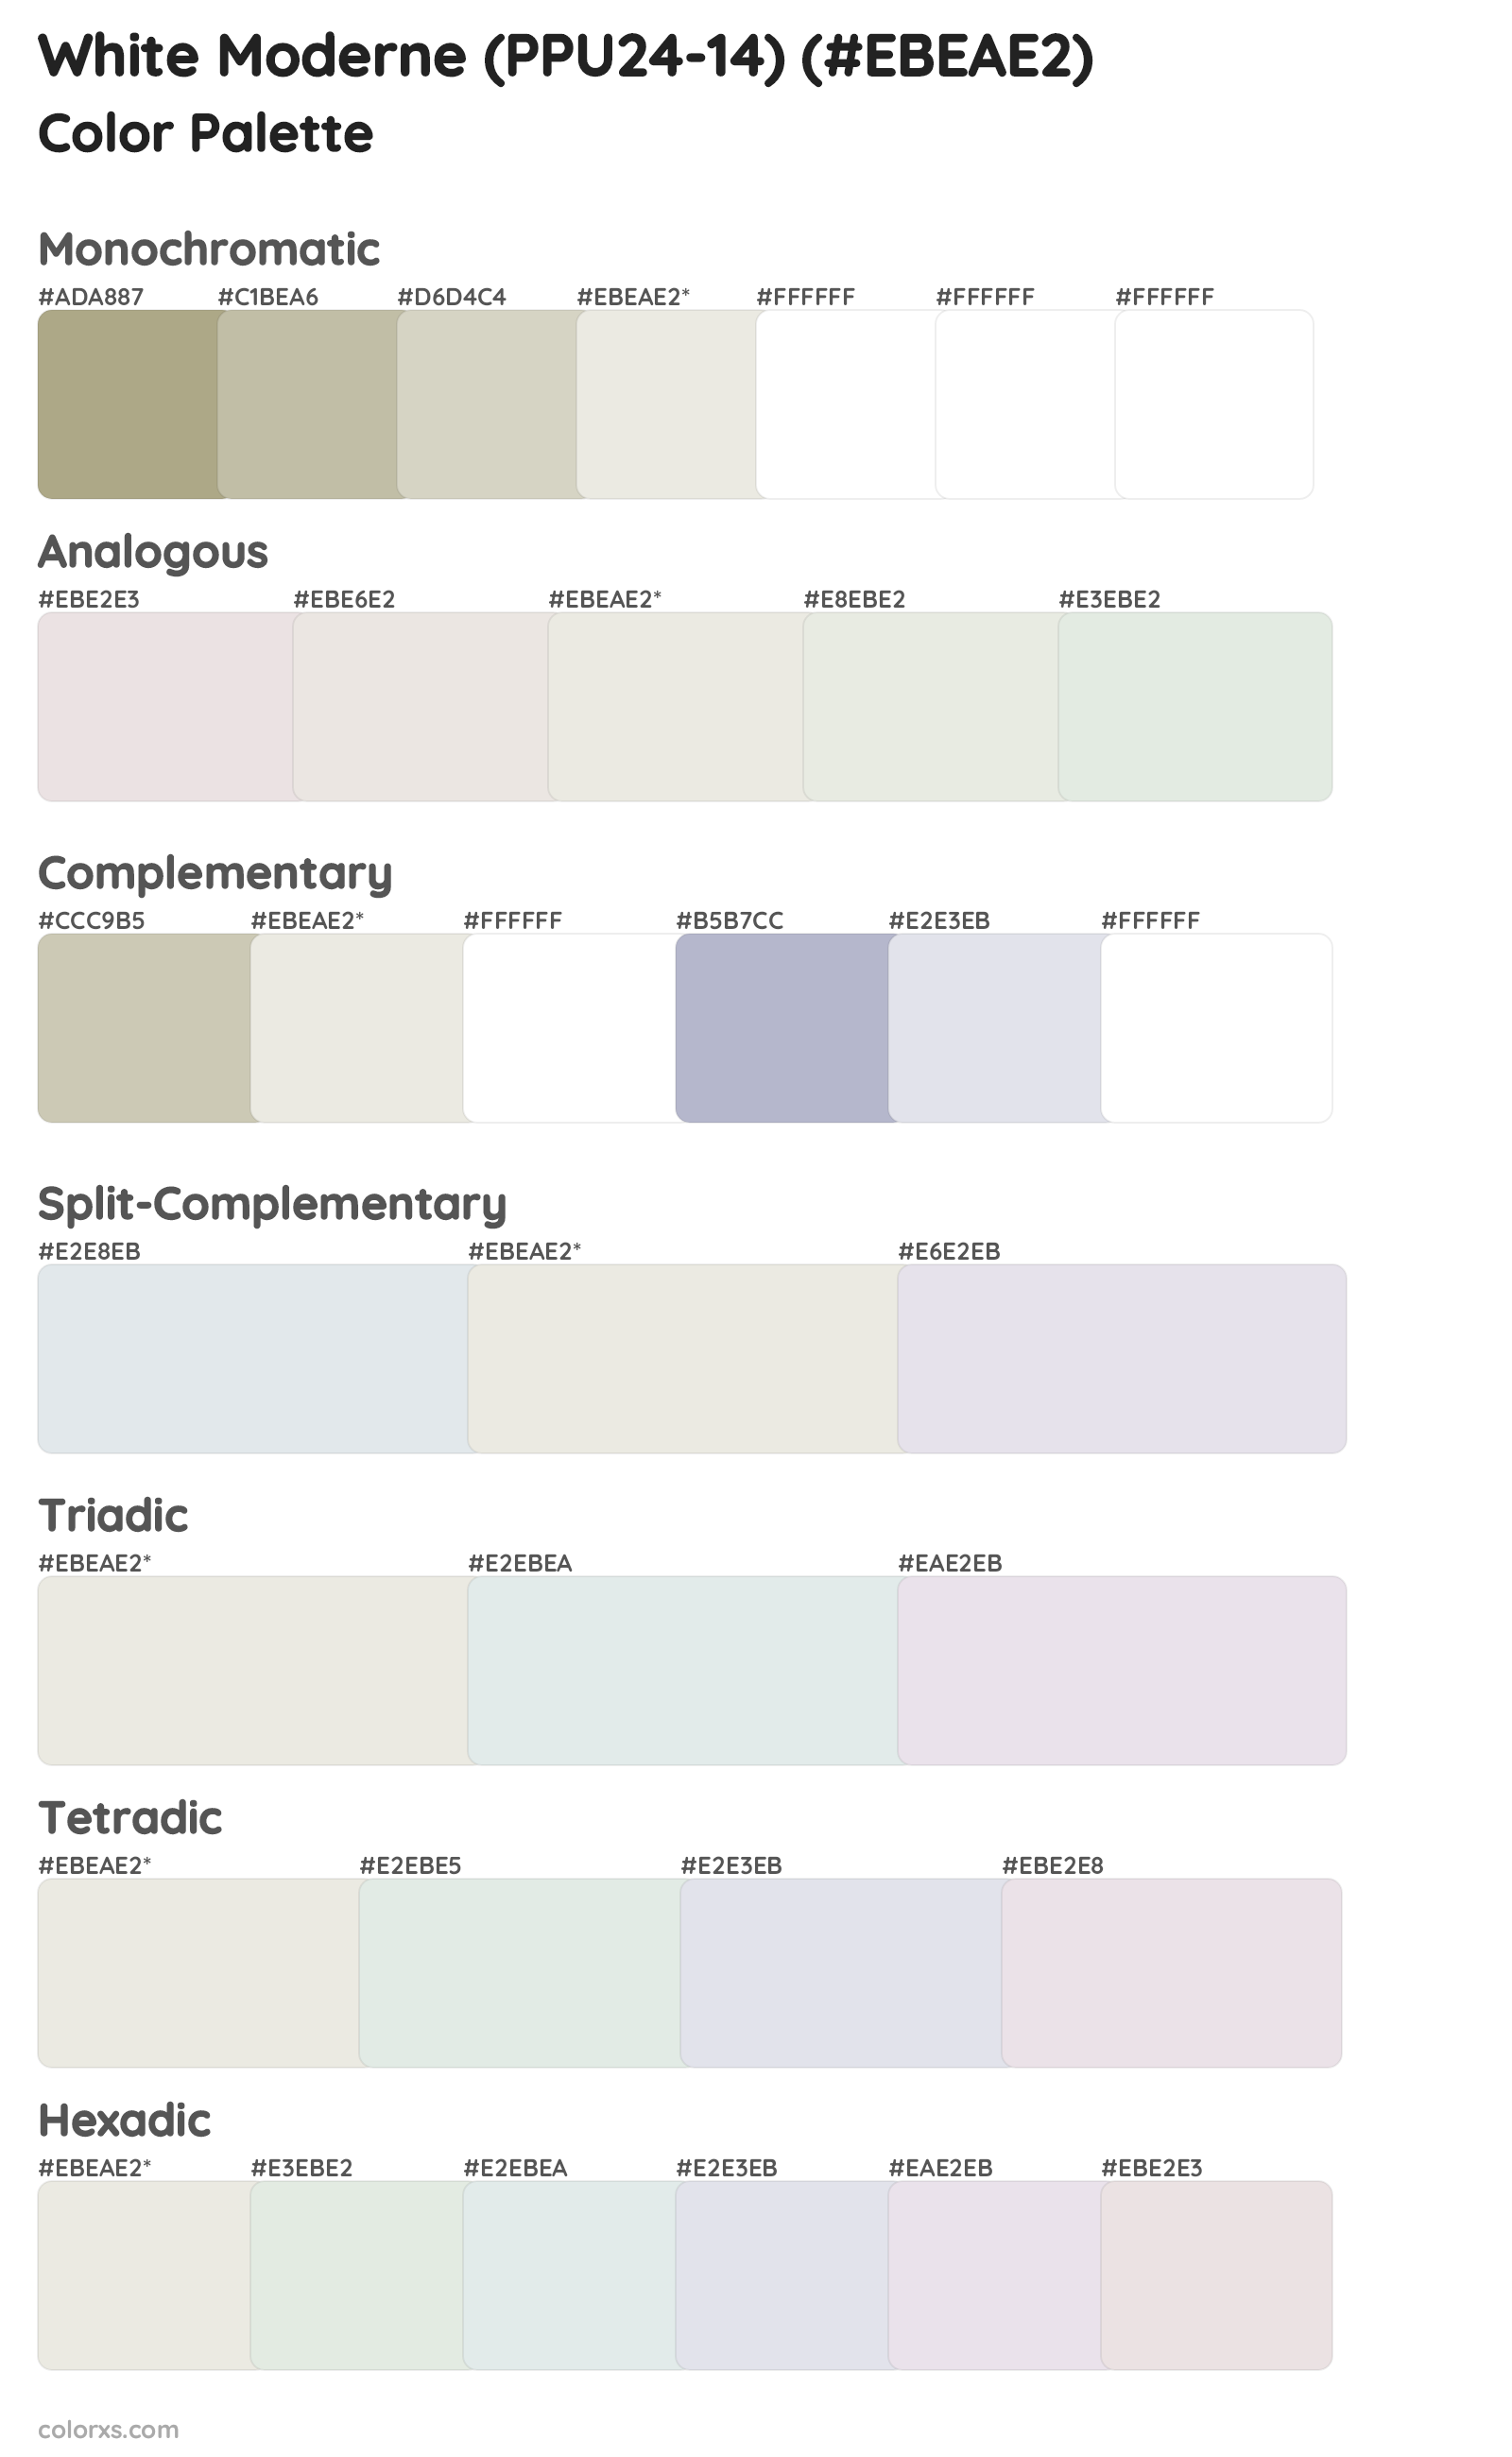 White Moderne (PPU24-14) Color Scheme Palettes